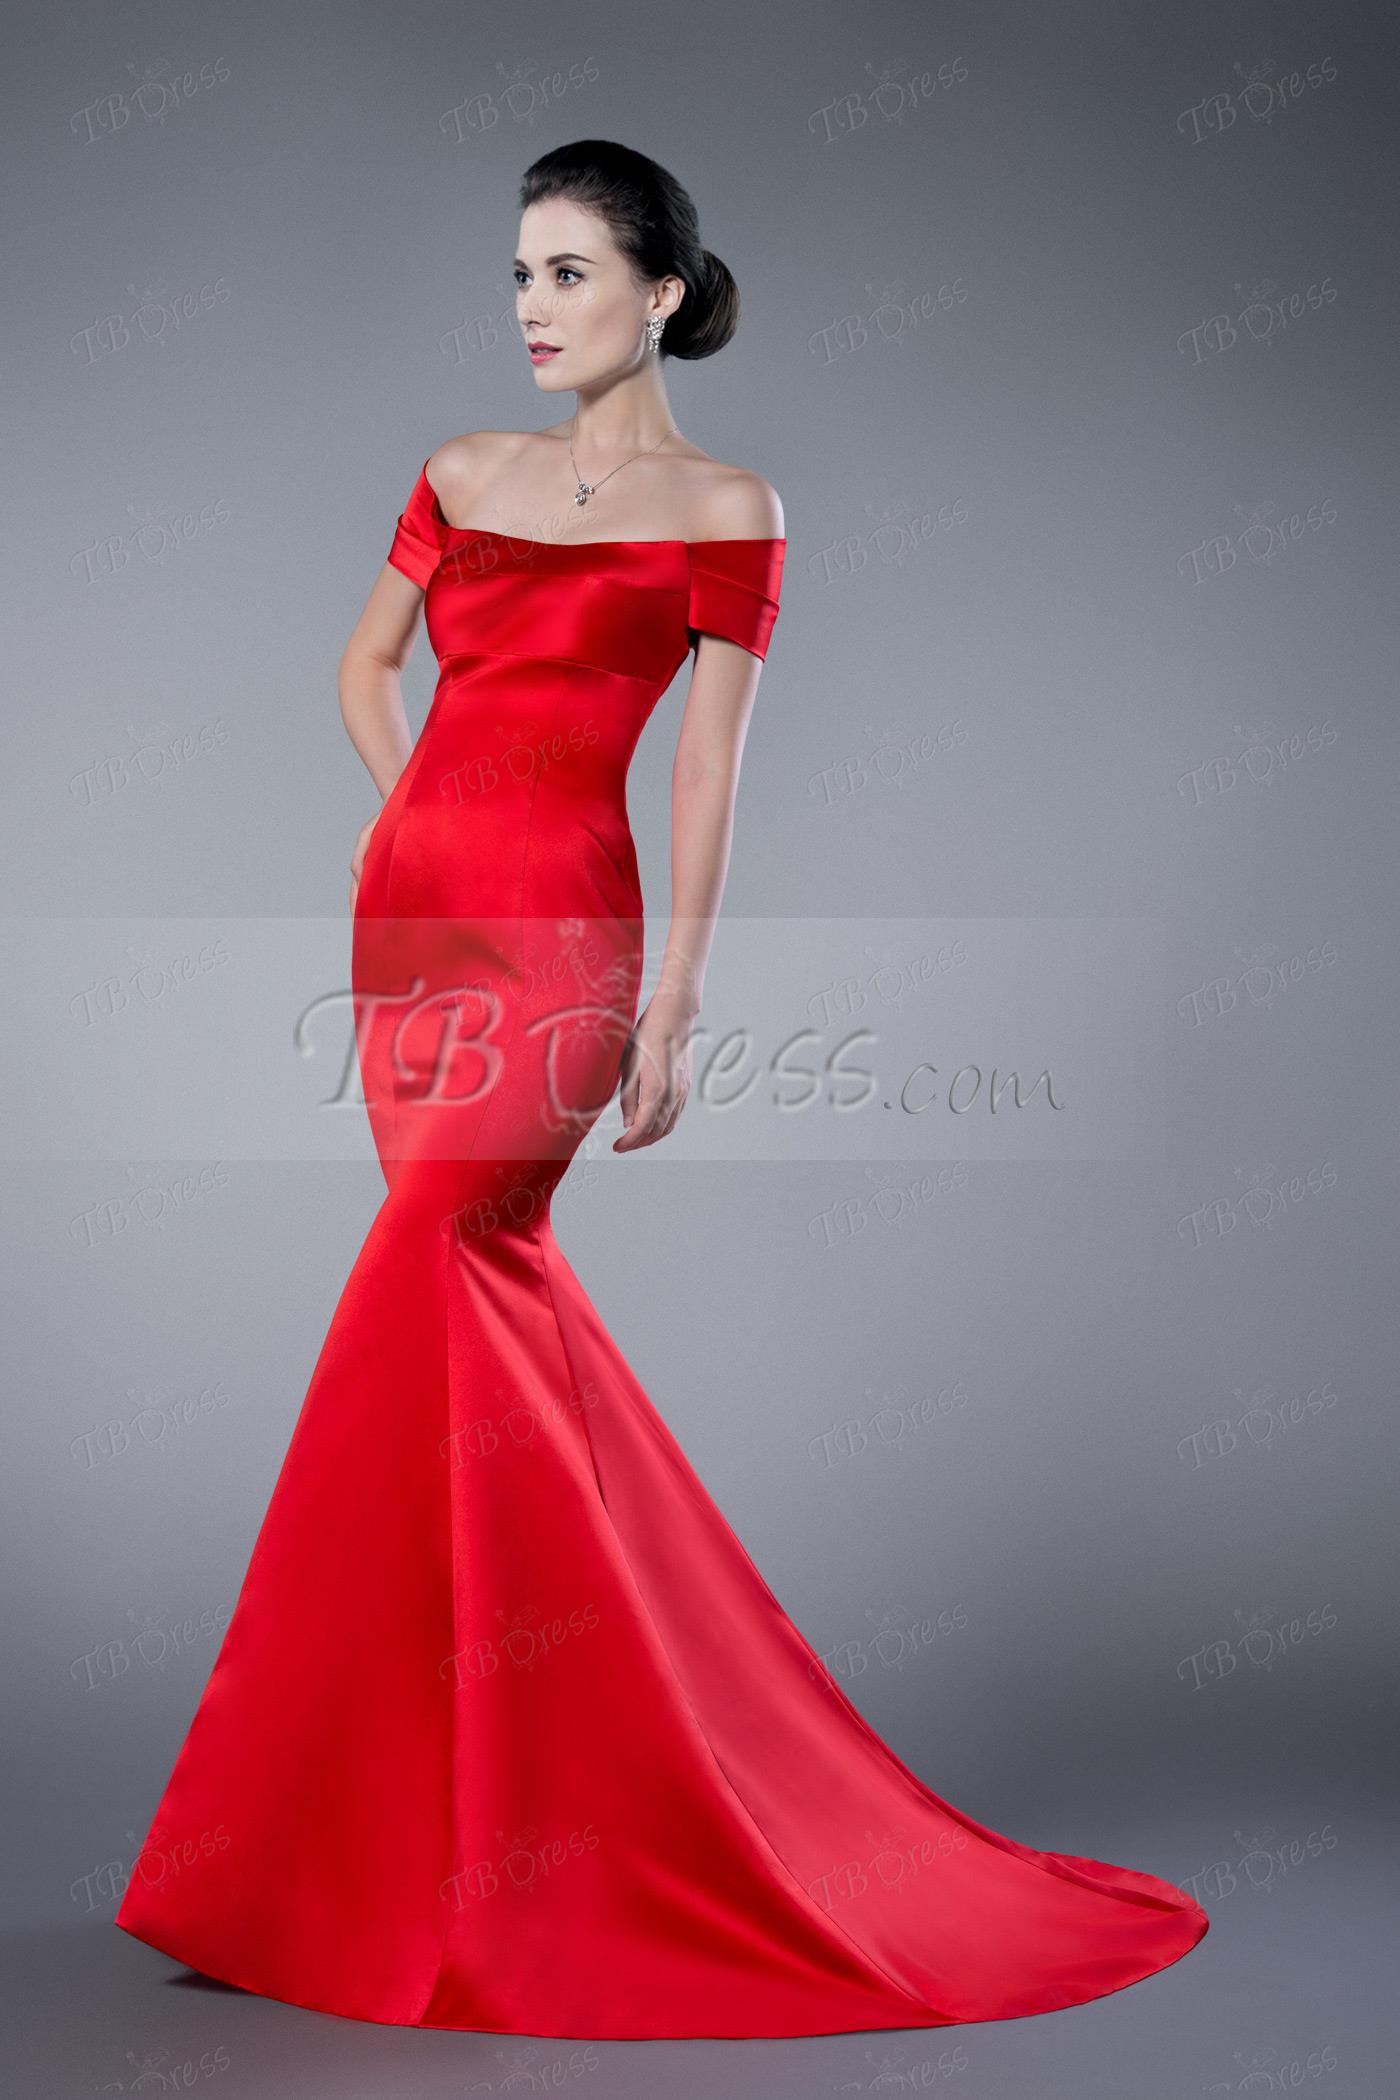 Superior Mermaid/Trumpet Off-the-Shoulder Zipper-Up Formal Evening Dress Item Code: 10784590